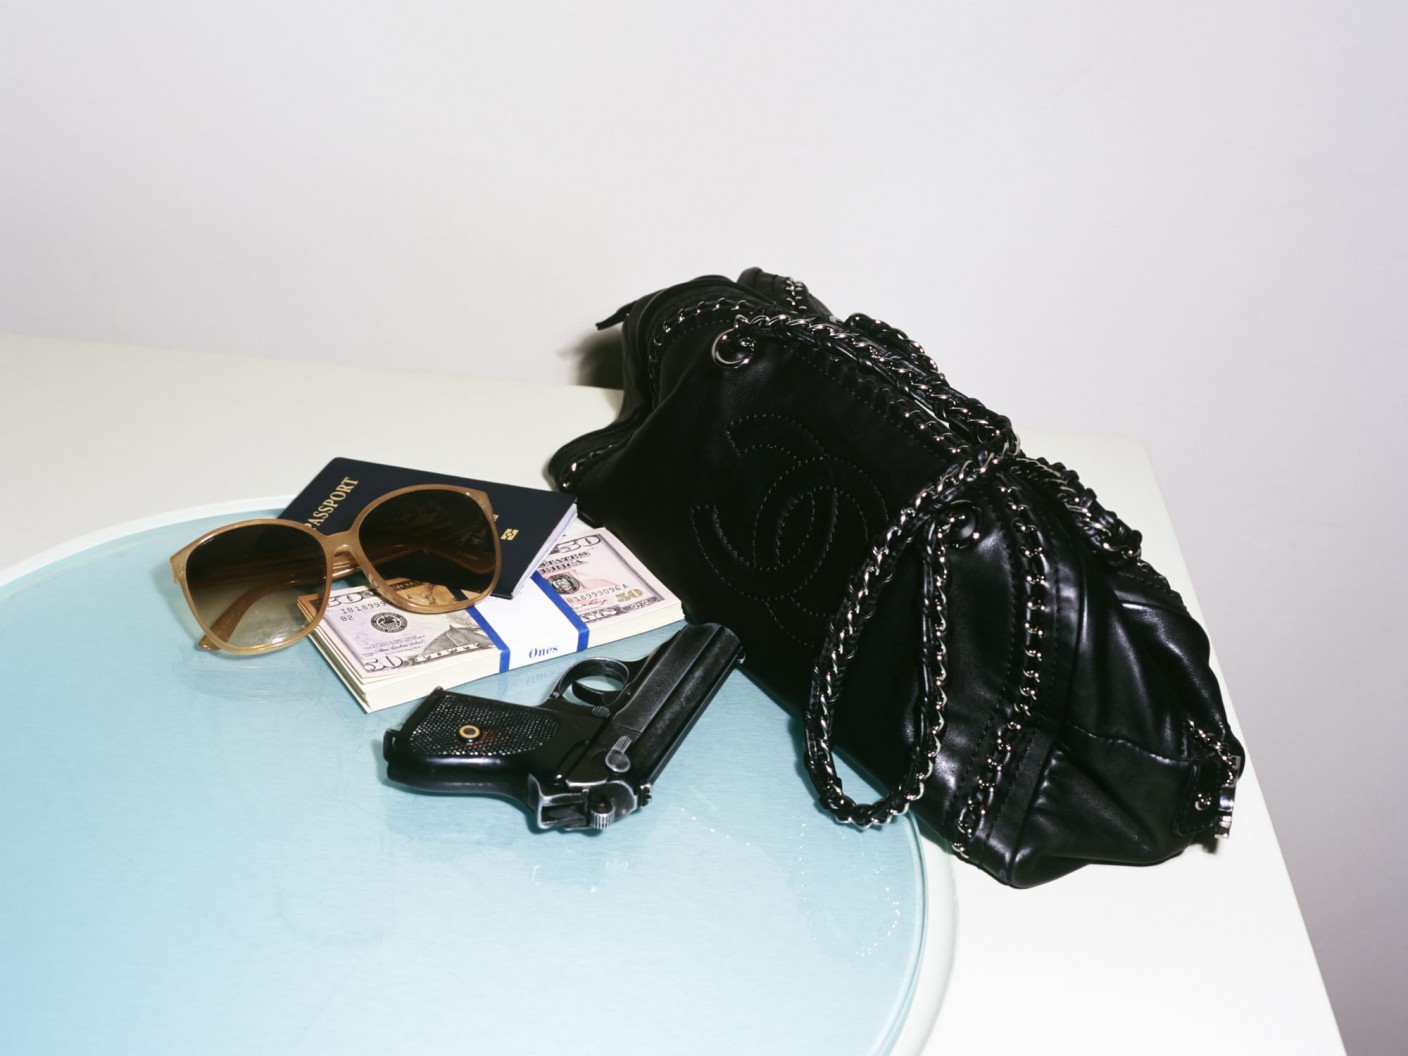 A handbag, a fake gun, a stack of fake bills, a passport, and sunglasses on a table